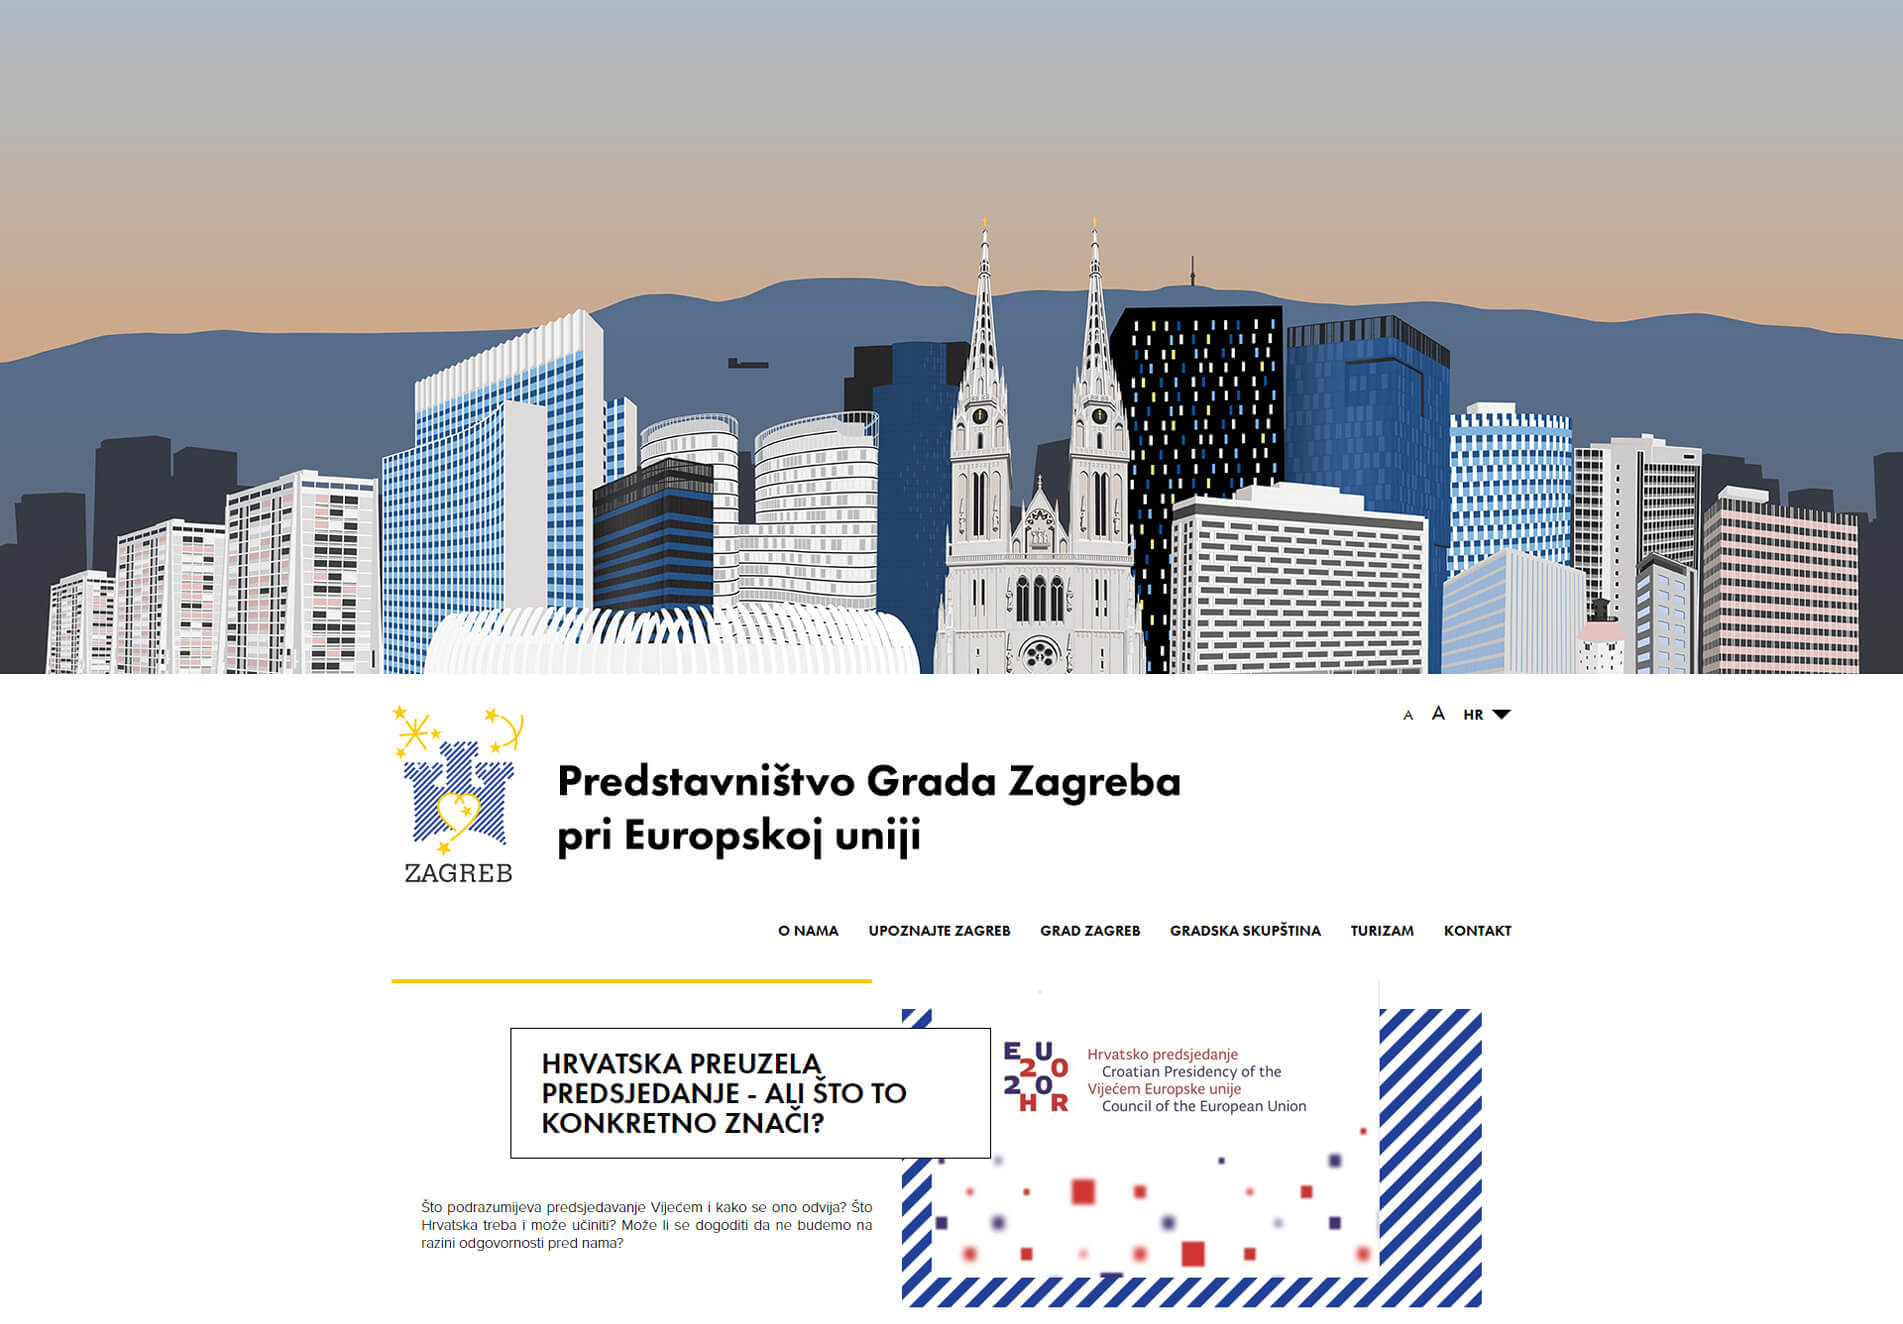 Predstavništvo grada Zagreba pri Europskoj uniji